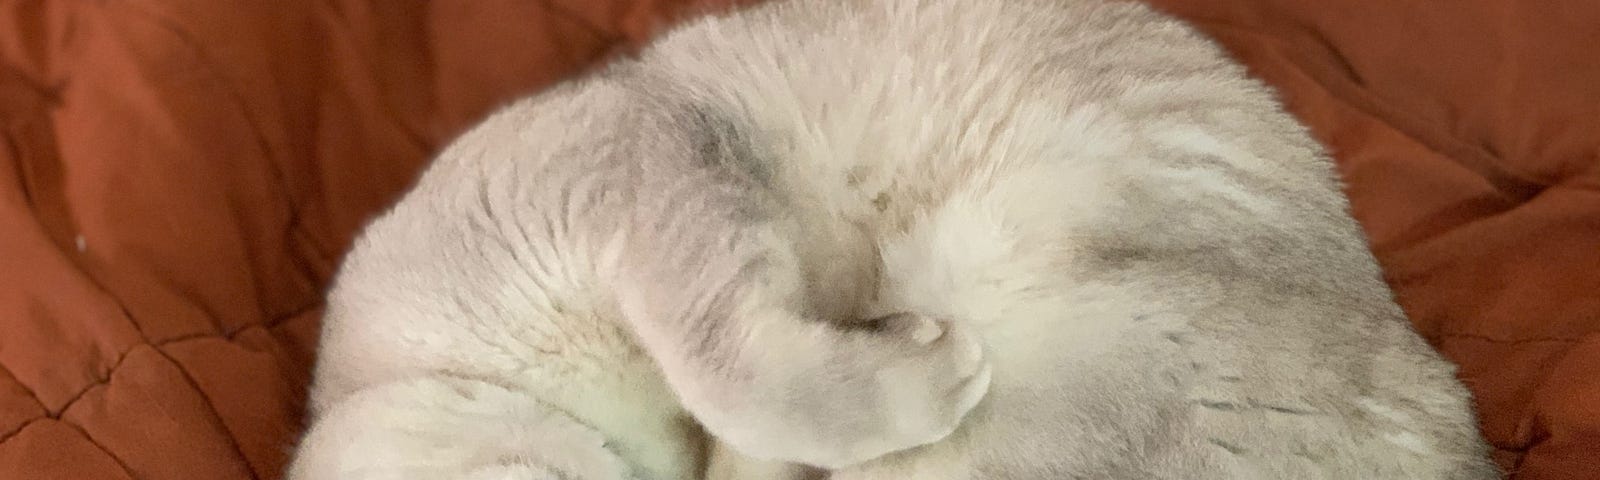 White cat on brown blanket